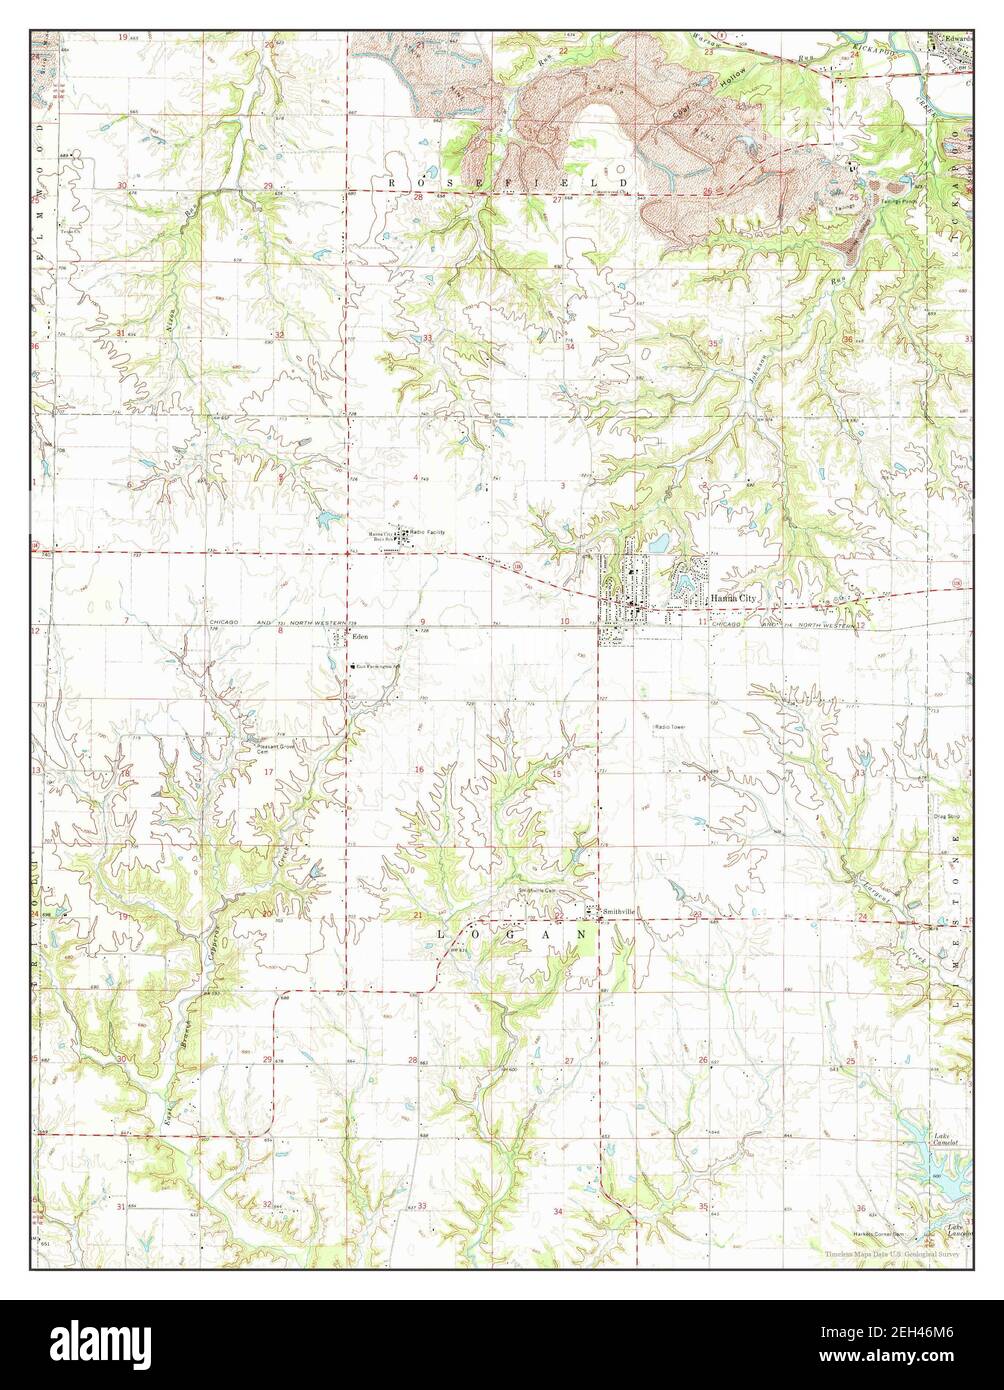 Hanna City, Illinois, map 1971, 1:24000, United States of America by Timeless Maps, data U.S. Geological Survey Stock Photo